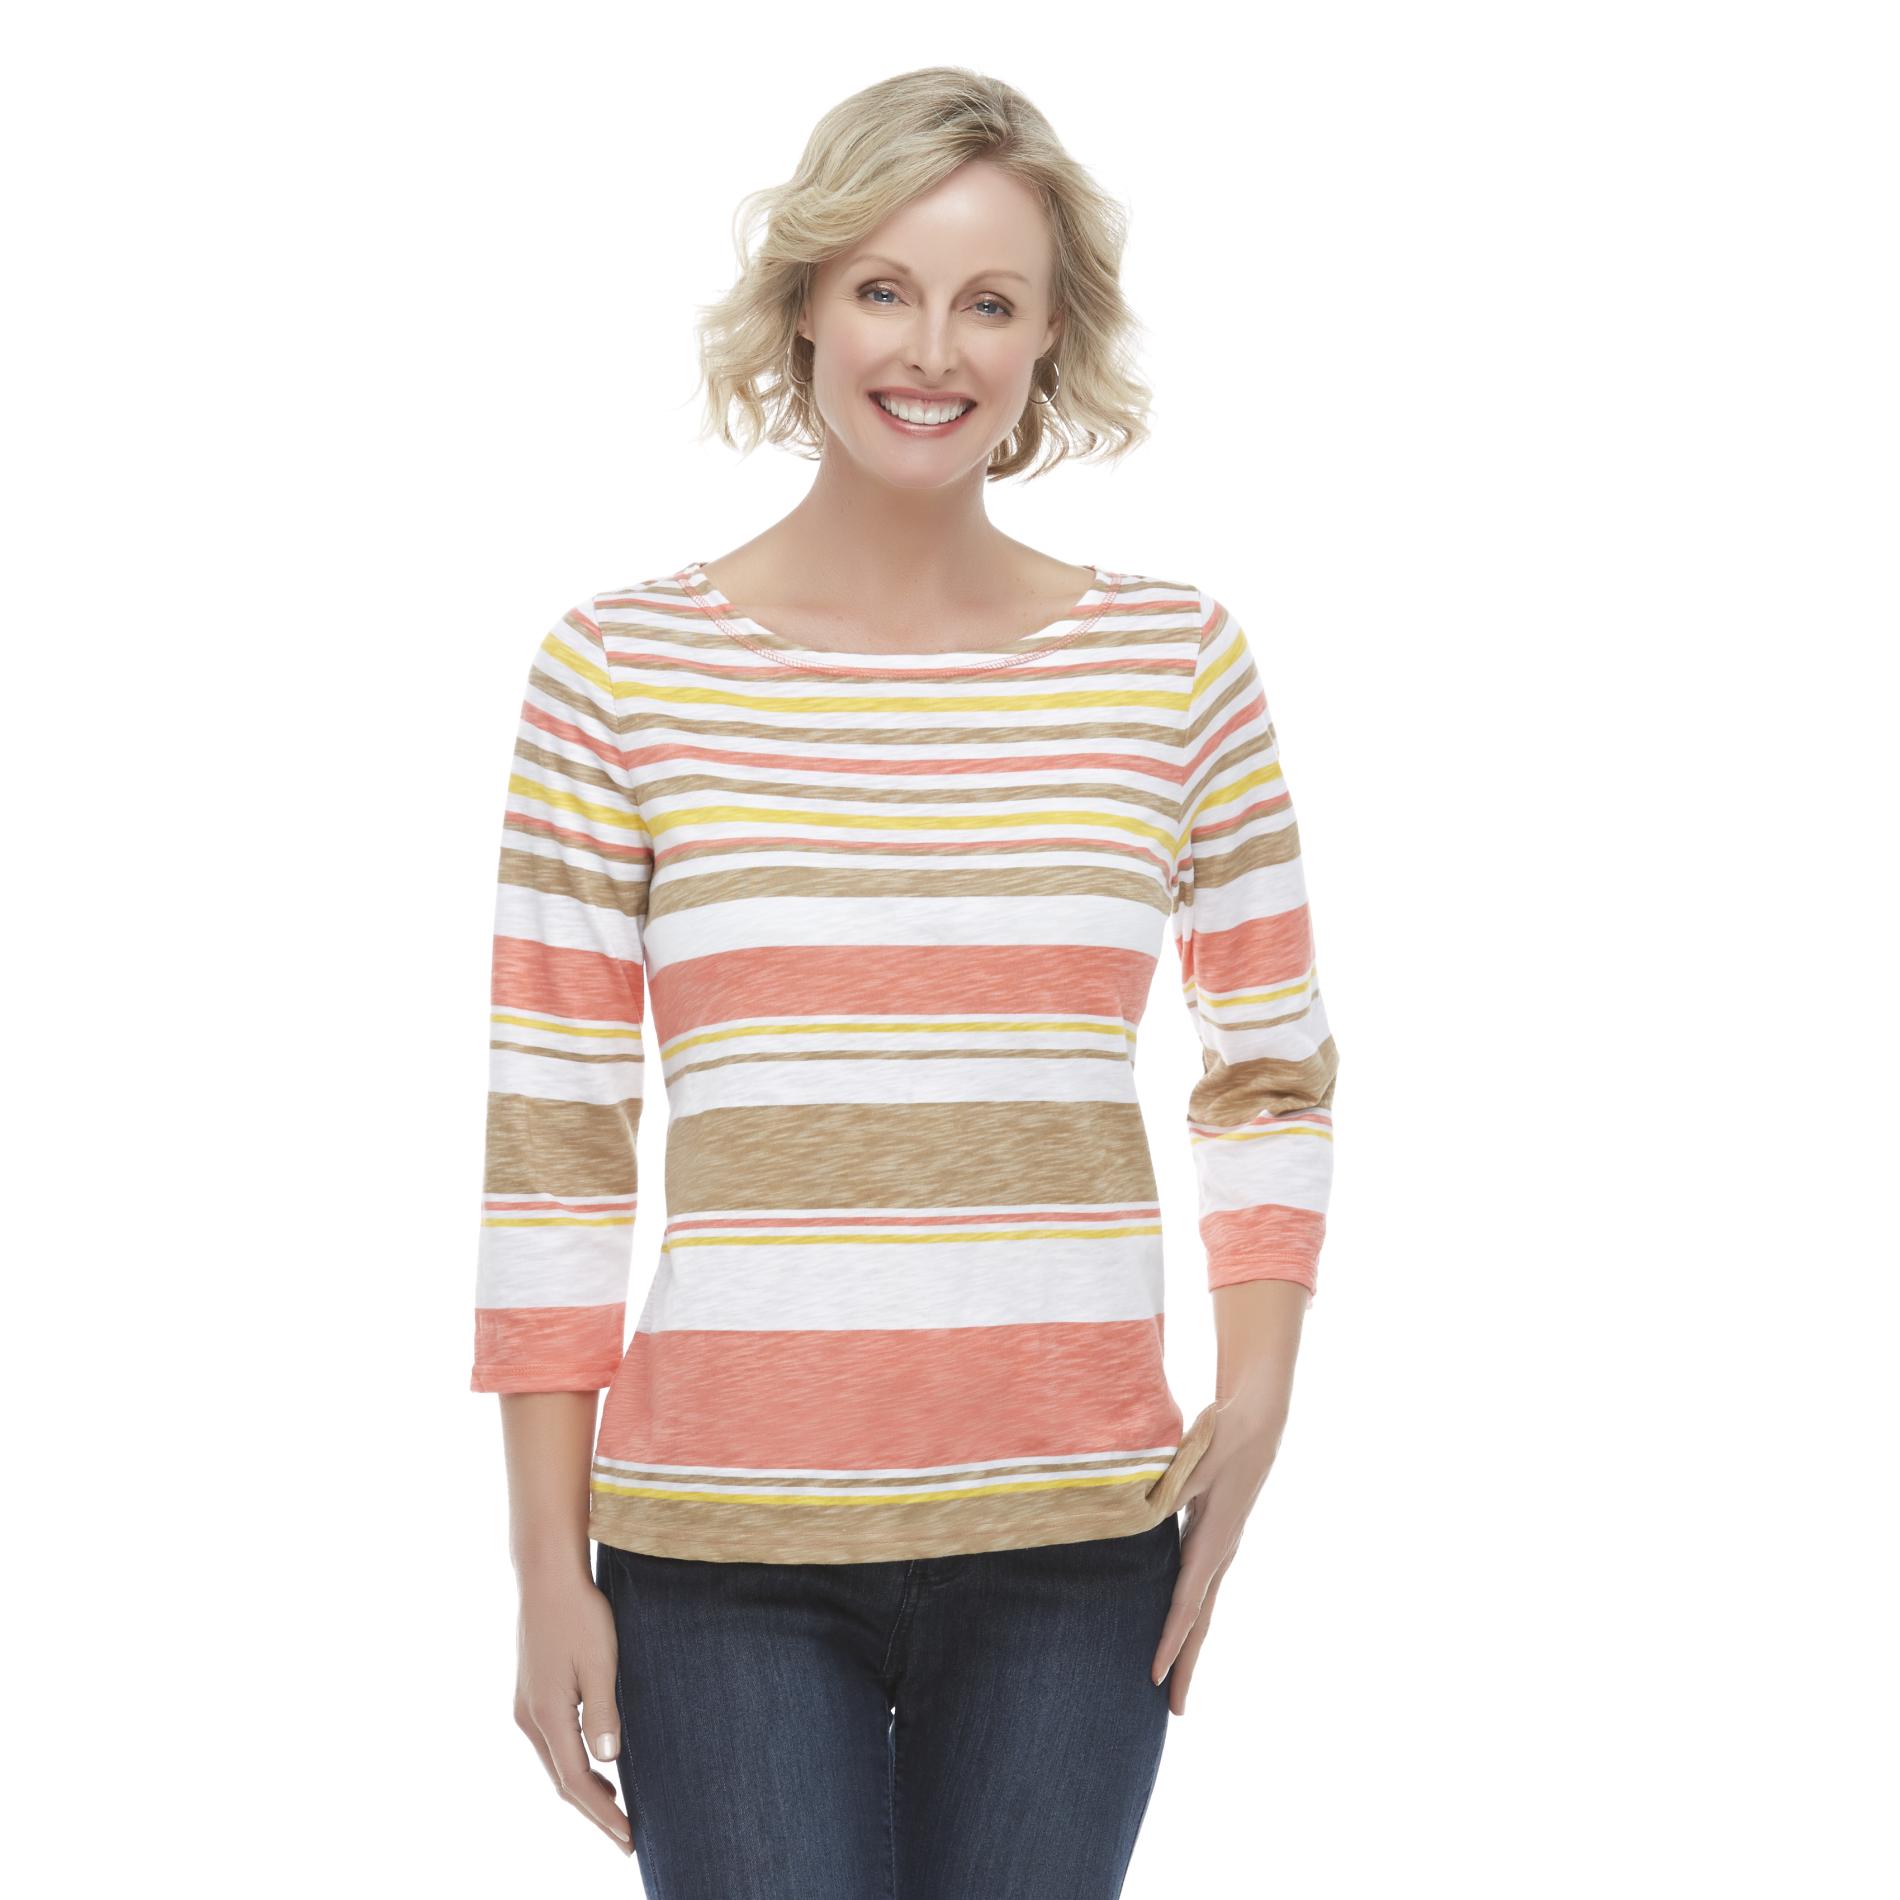 Basic Editions Women's Slub Knit T-Shirt - Striped